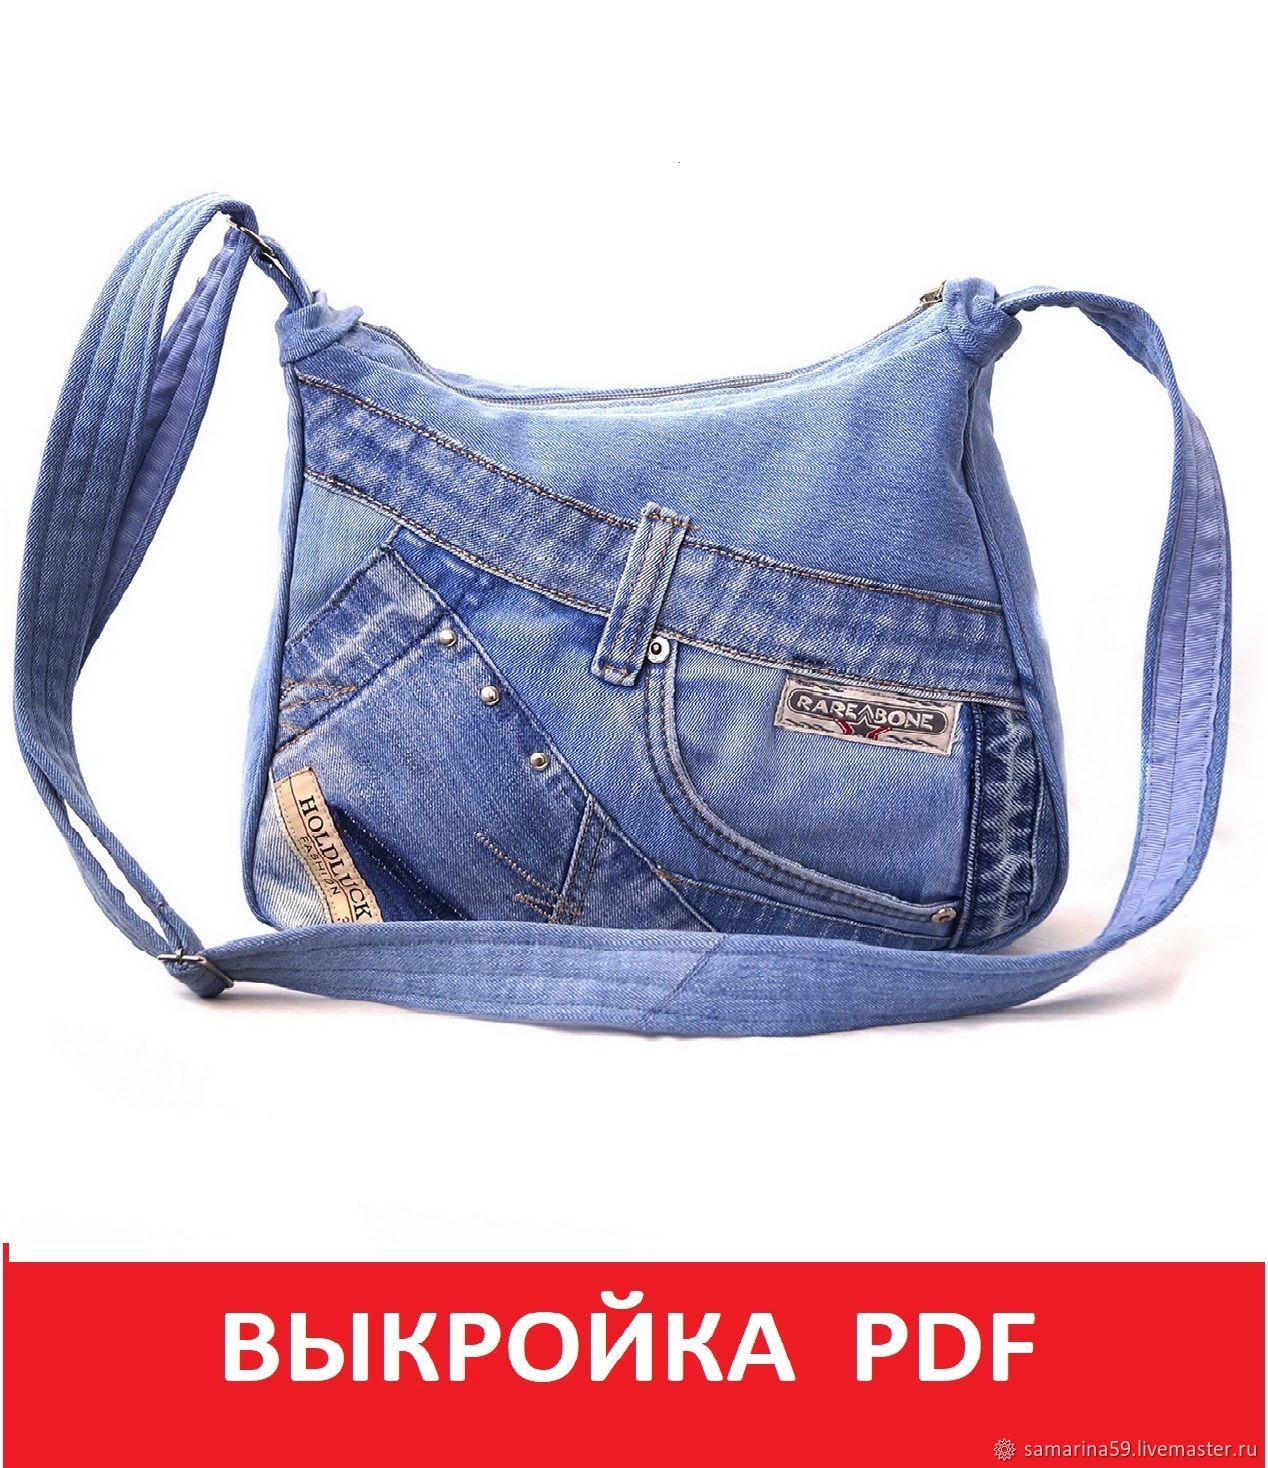 Выкройка женской сумки «Эмили» | PDF шаблон